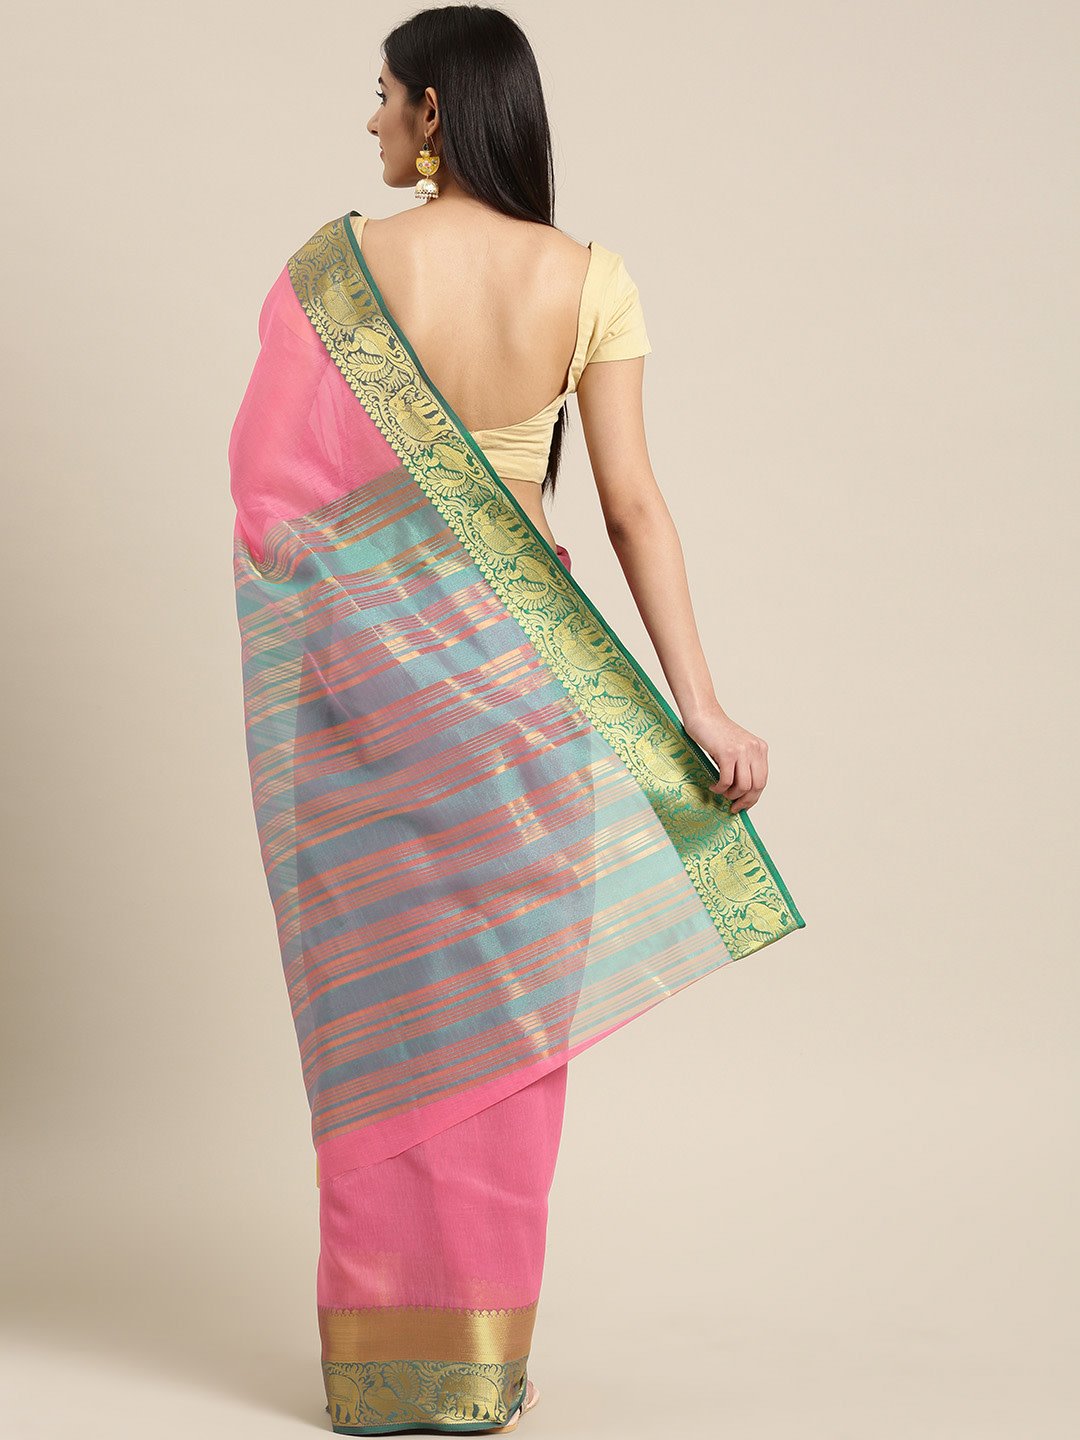 Ishin Chanderi Cotton Pink Solid With Golden Zari Border Women's Saree/Sari